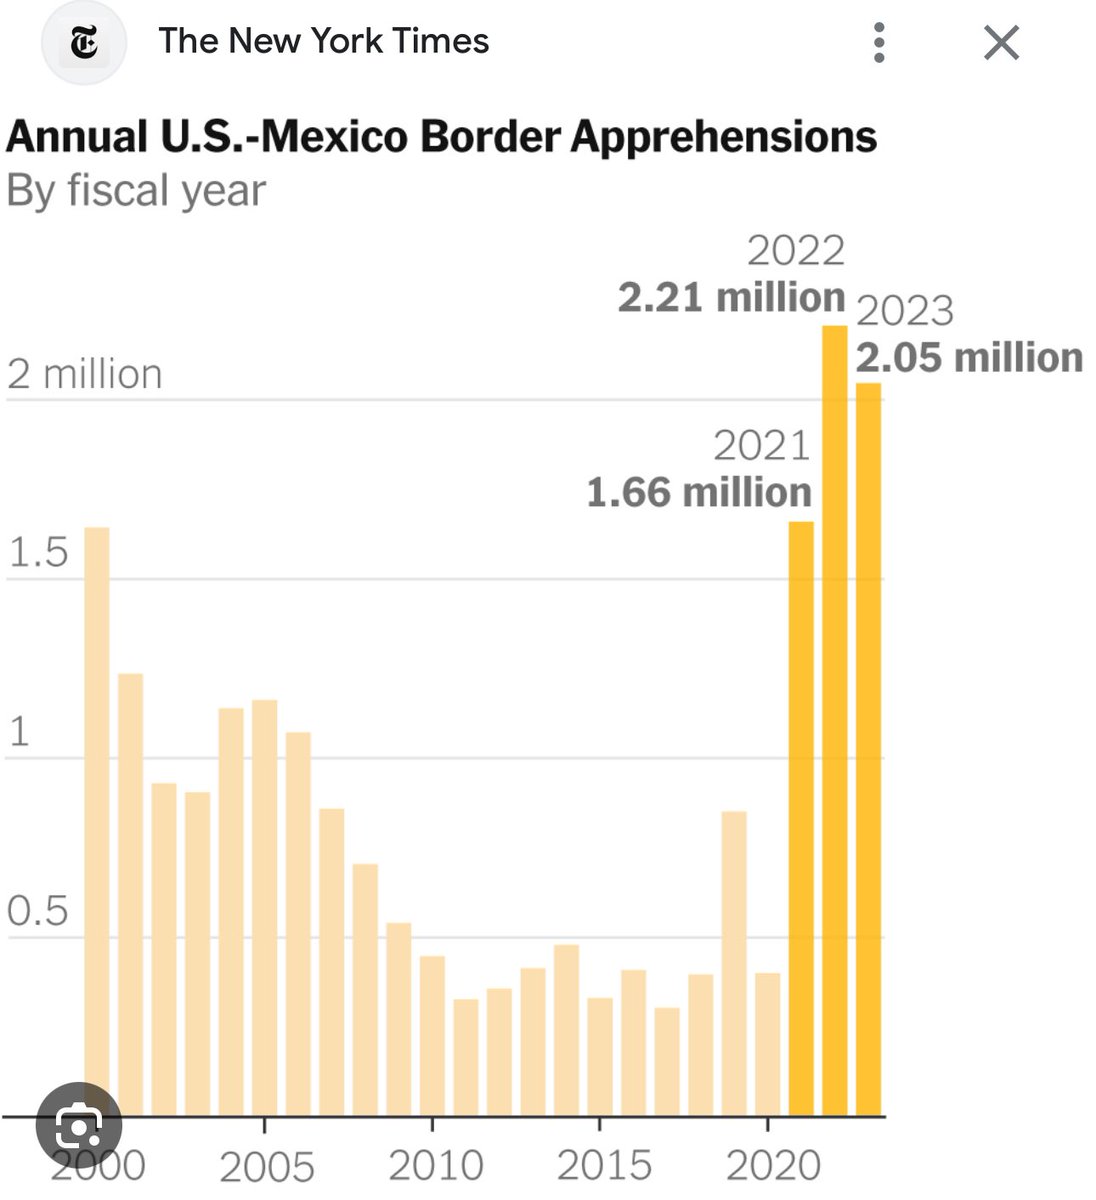 @BidenHQ Biden lies. His border numbers don’t.